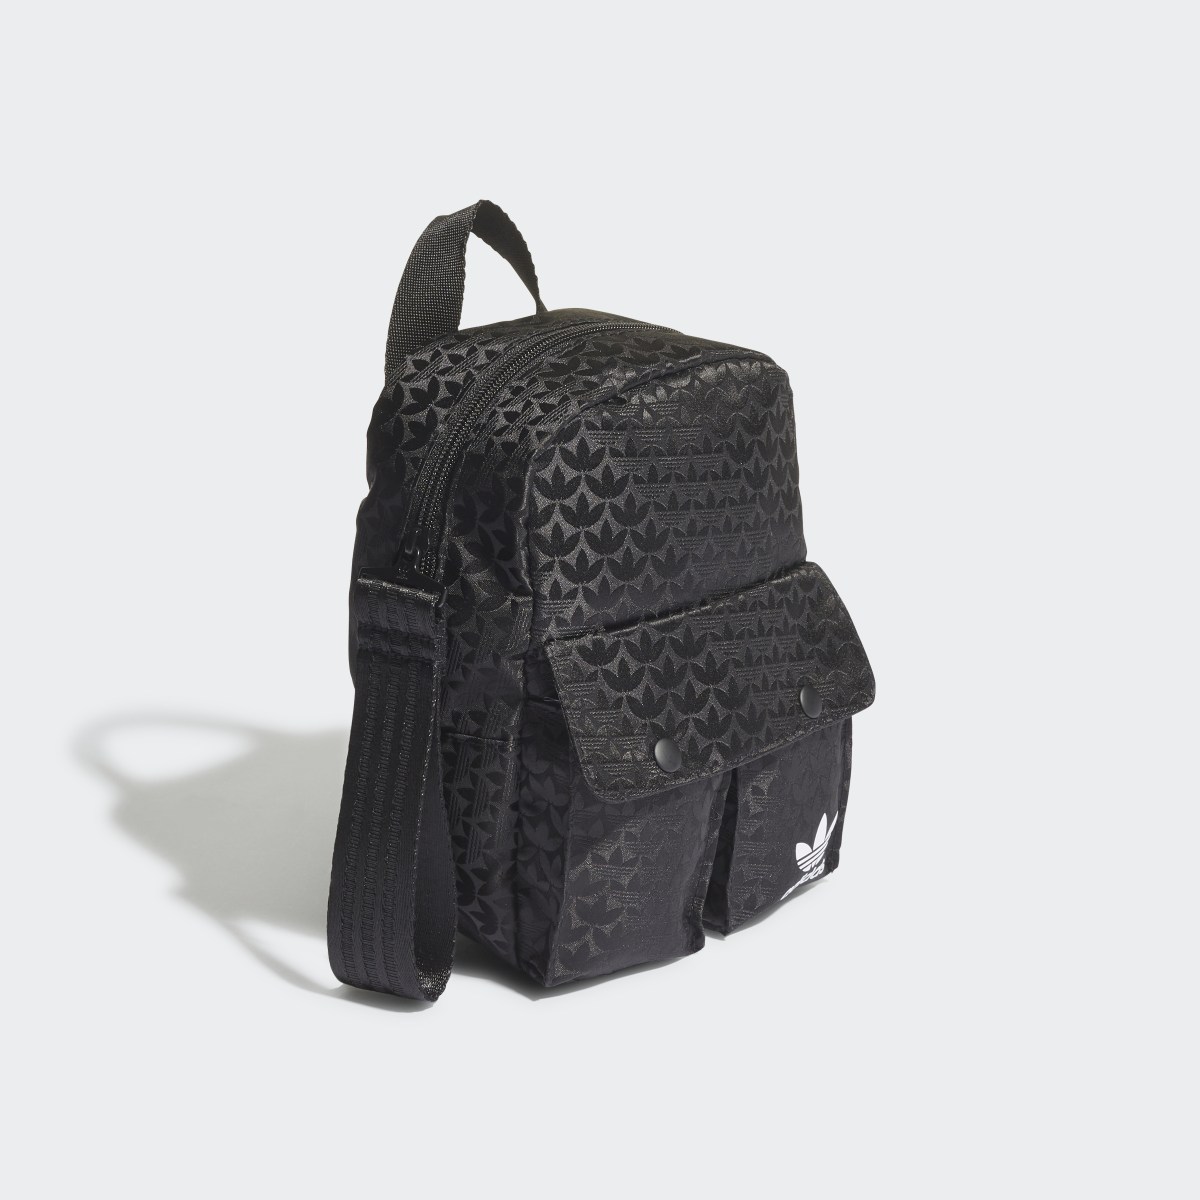 Adidas Mini Backpack. 4